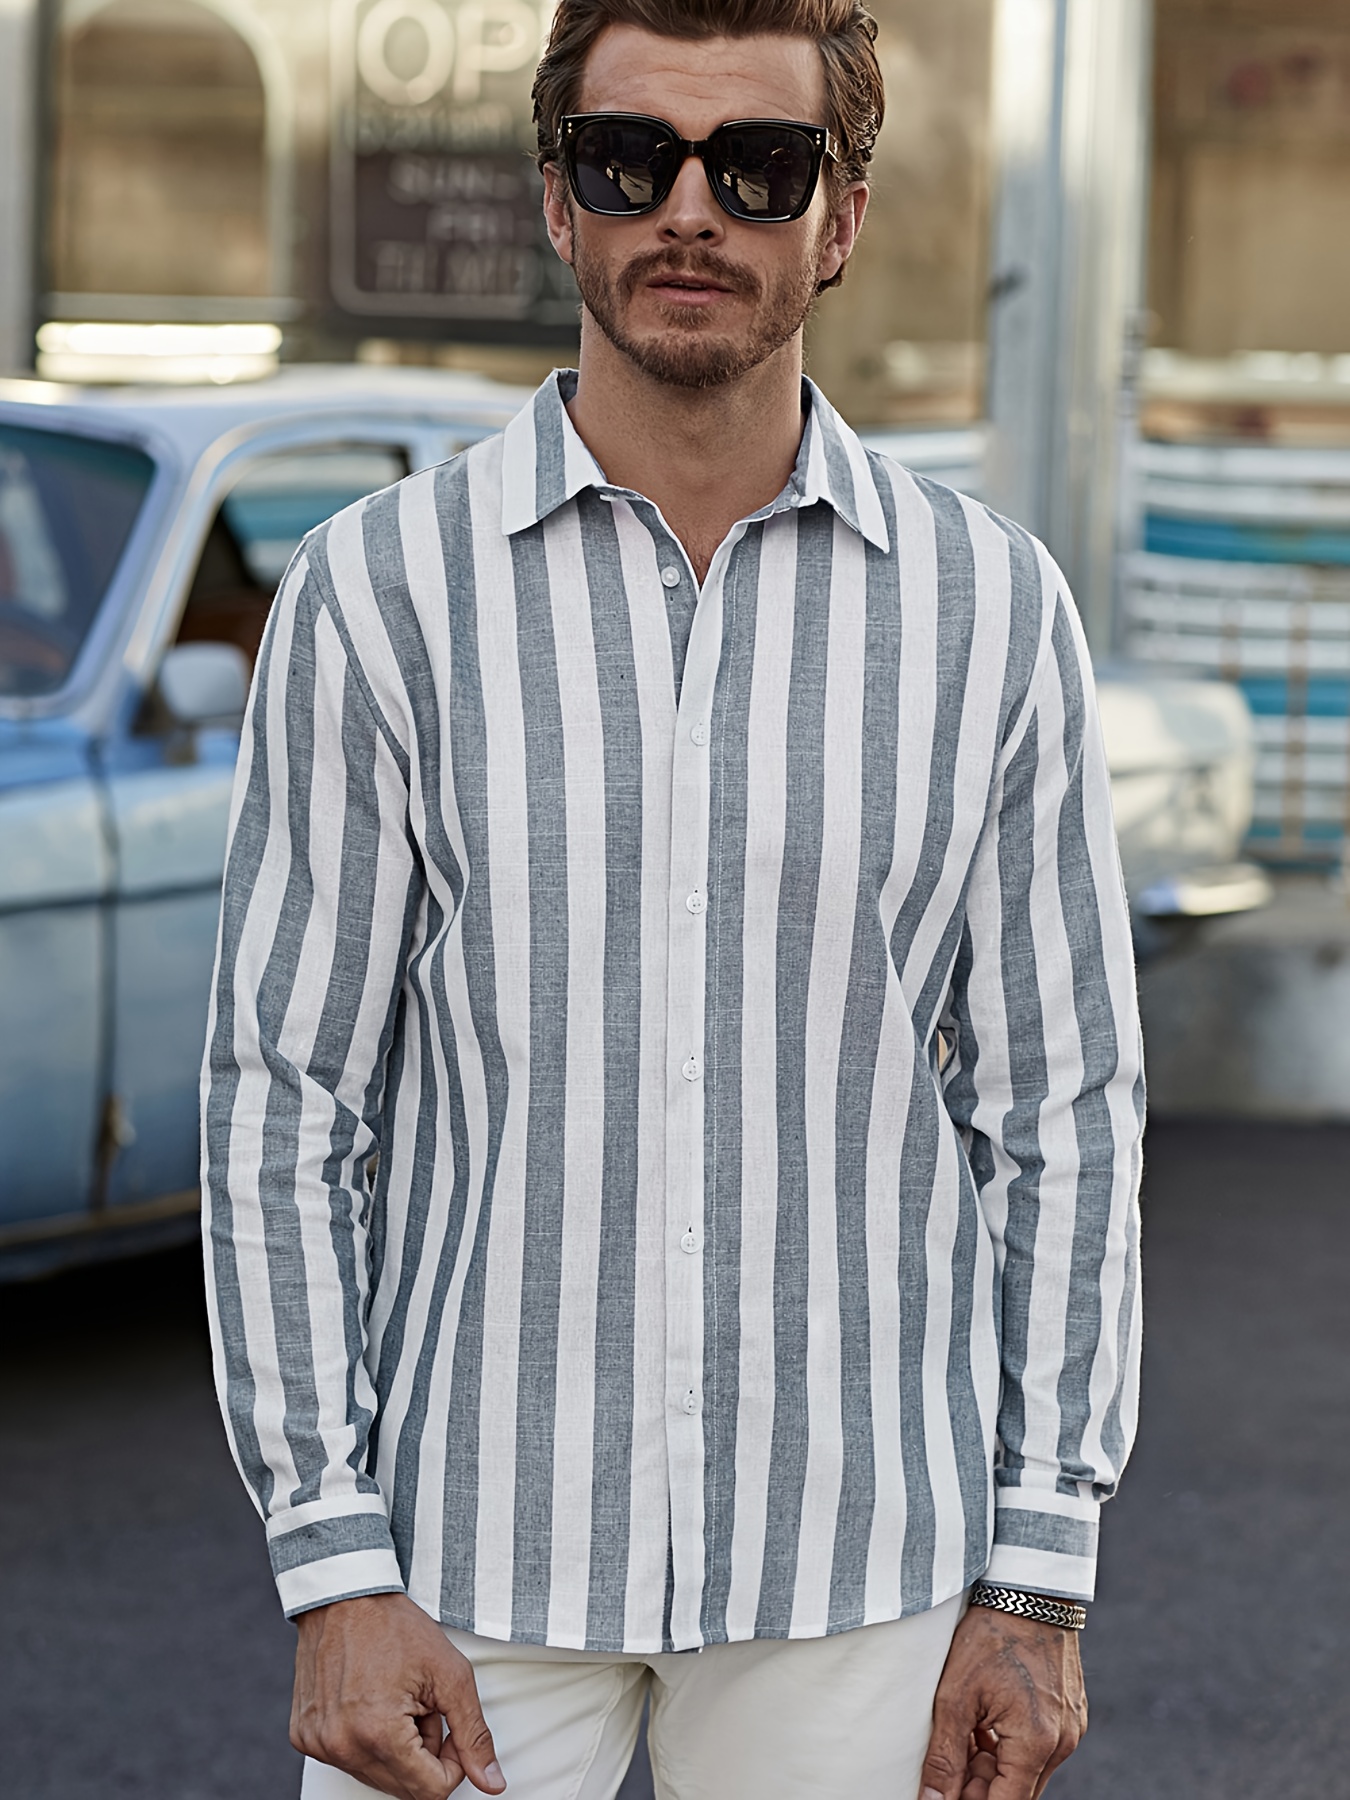 Men's Striped Button Up Shirt Men's Fashion Casual Striped Linen